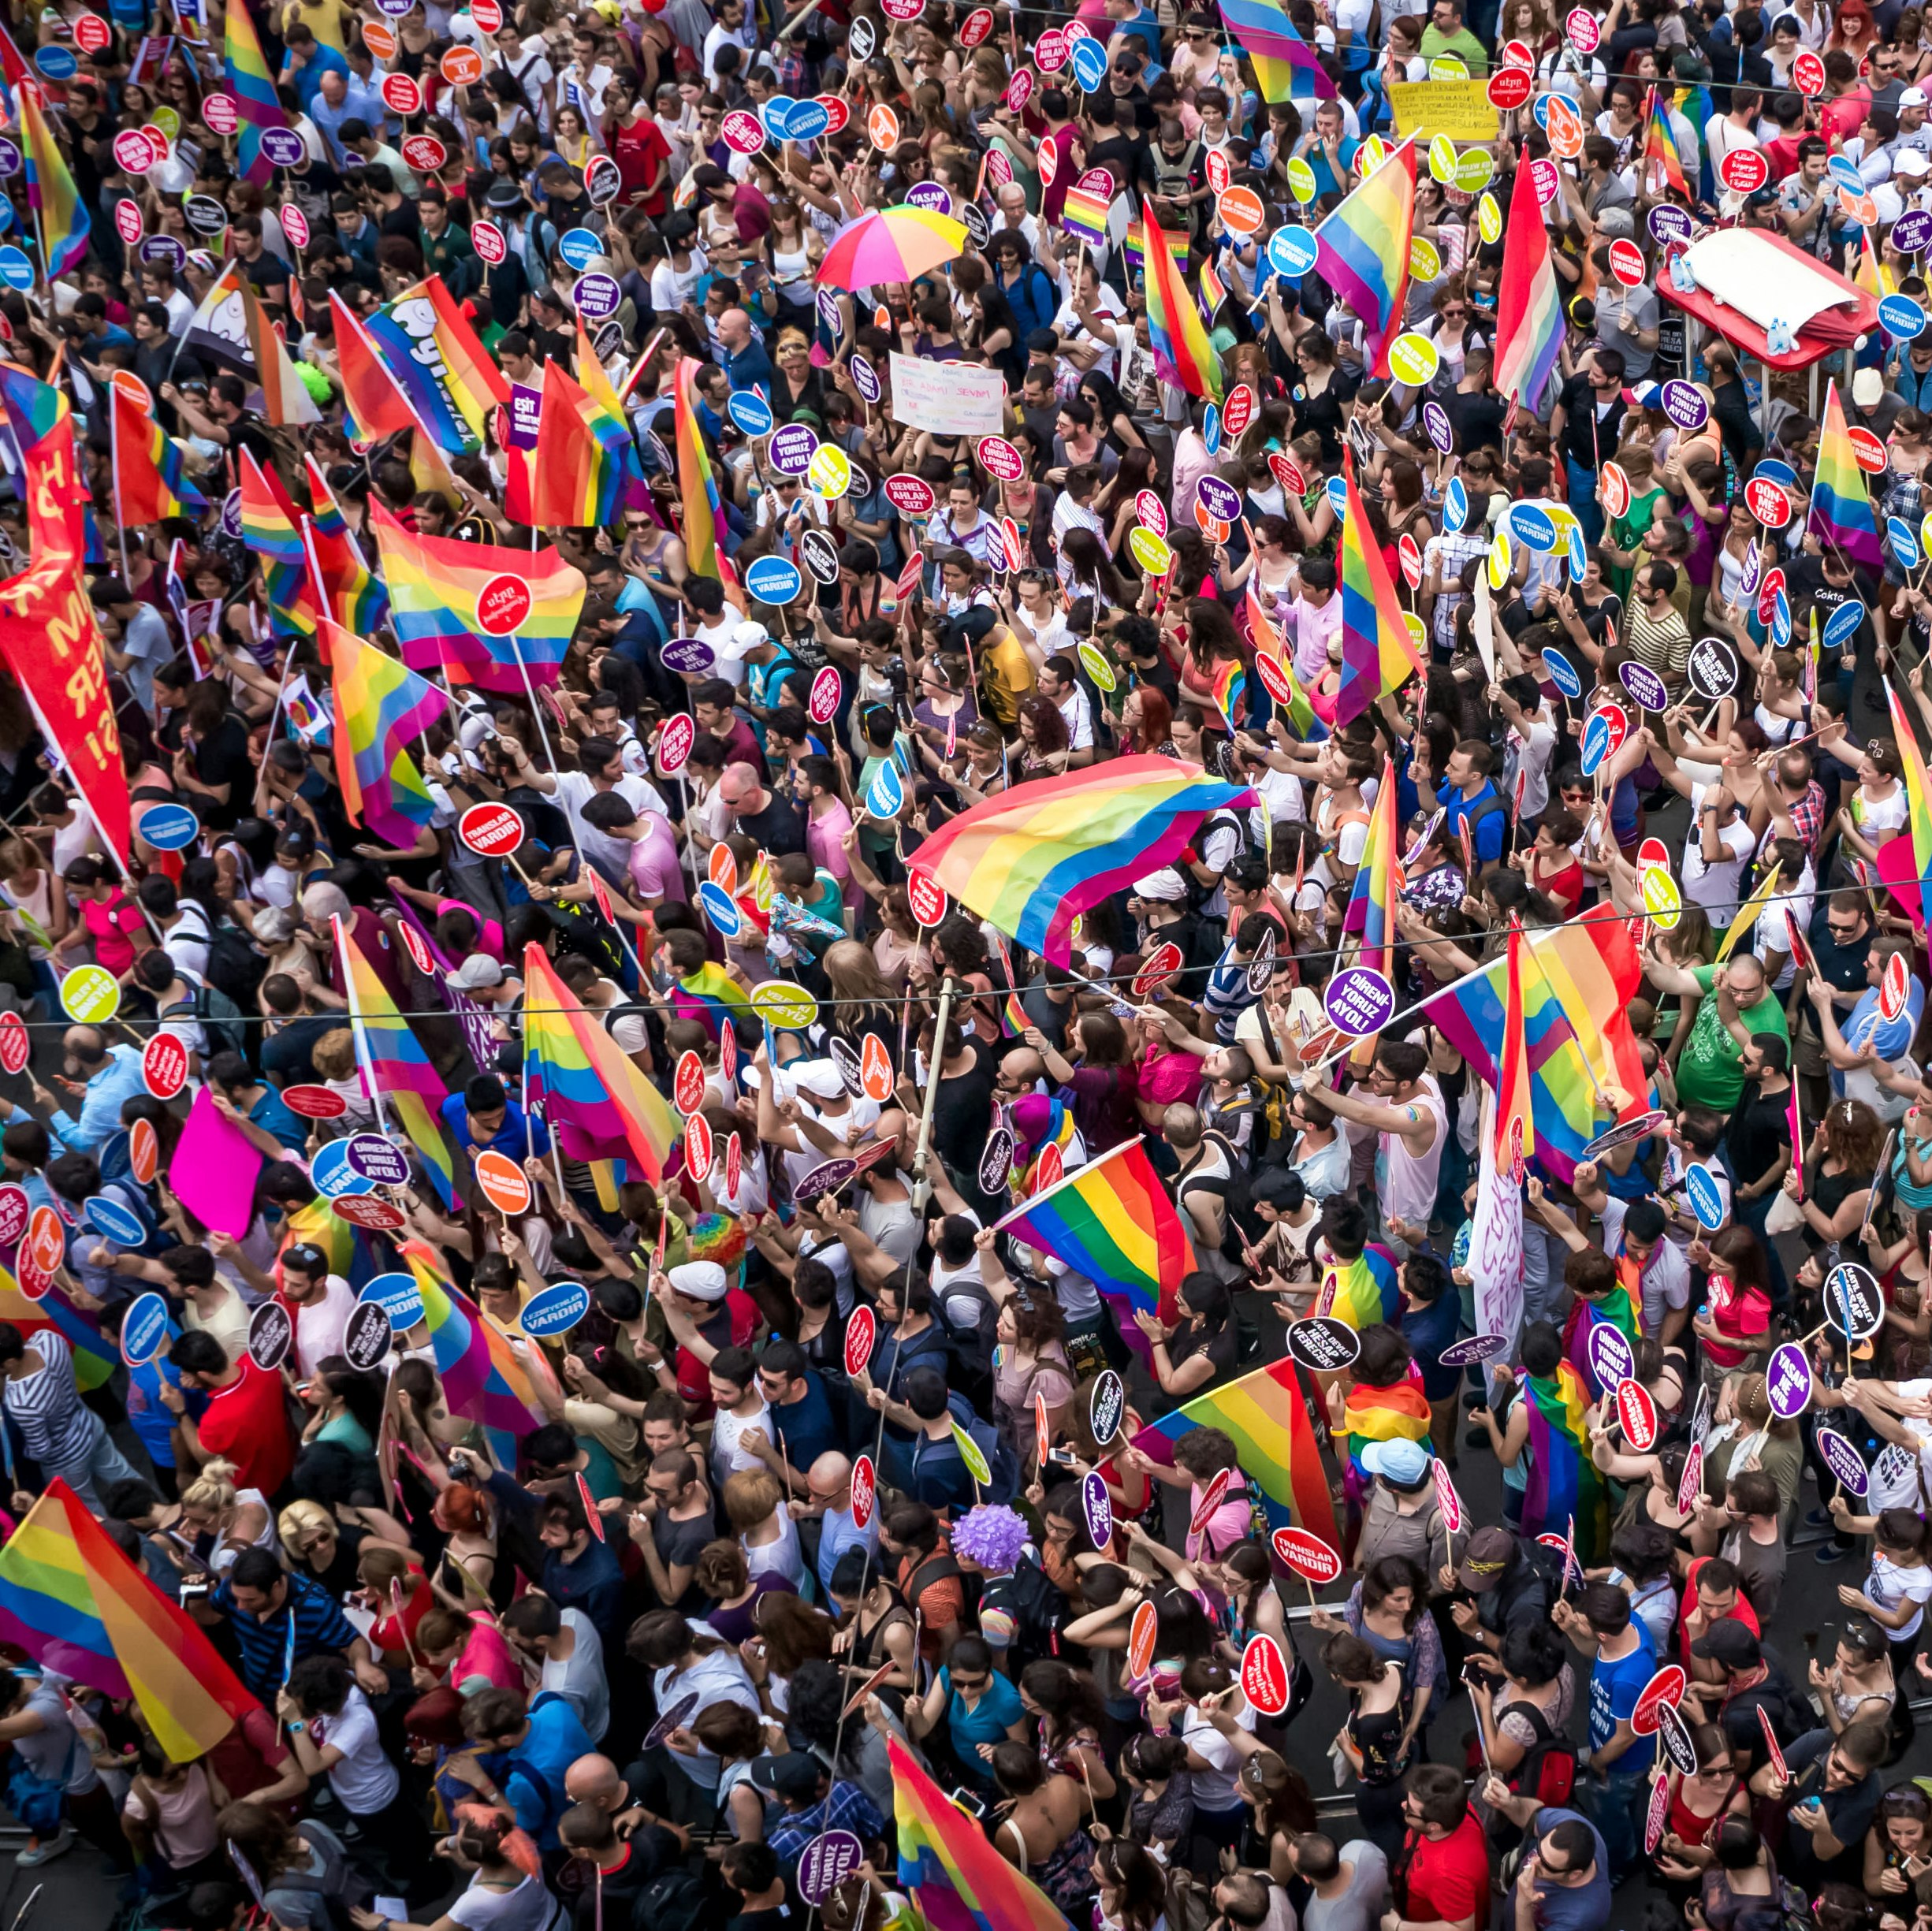 Crowd of demonstators, many waving rainbow flags